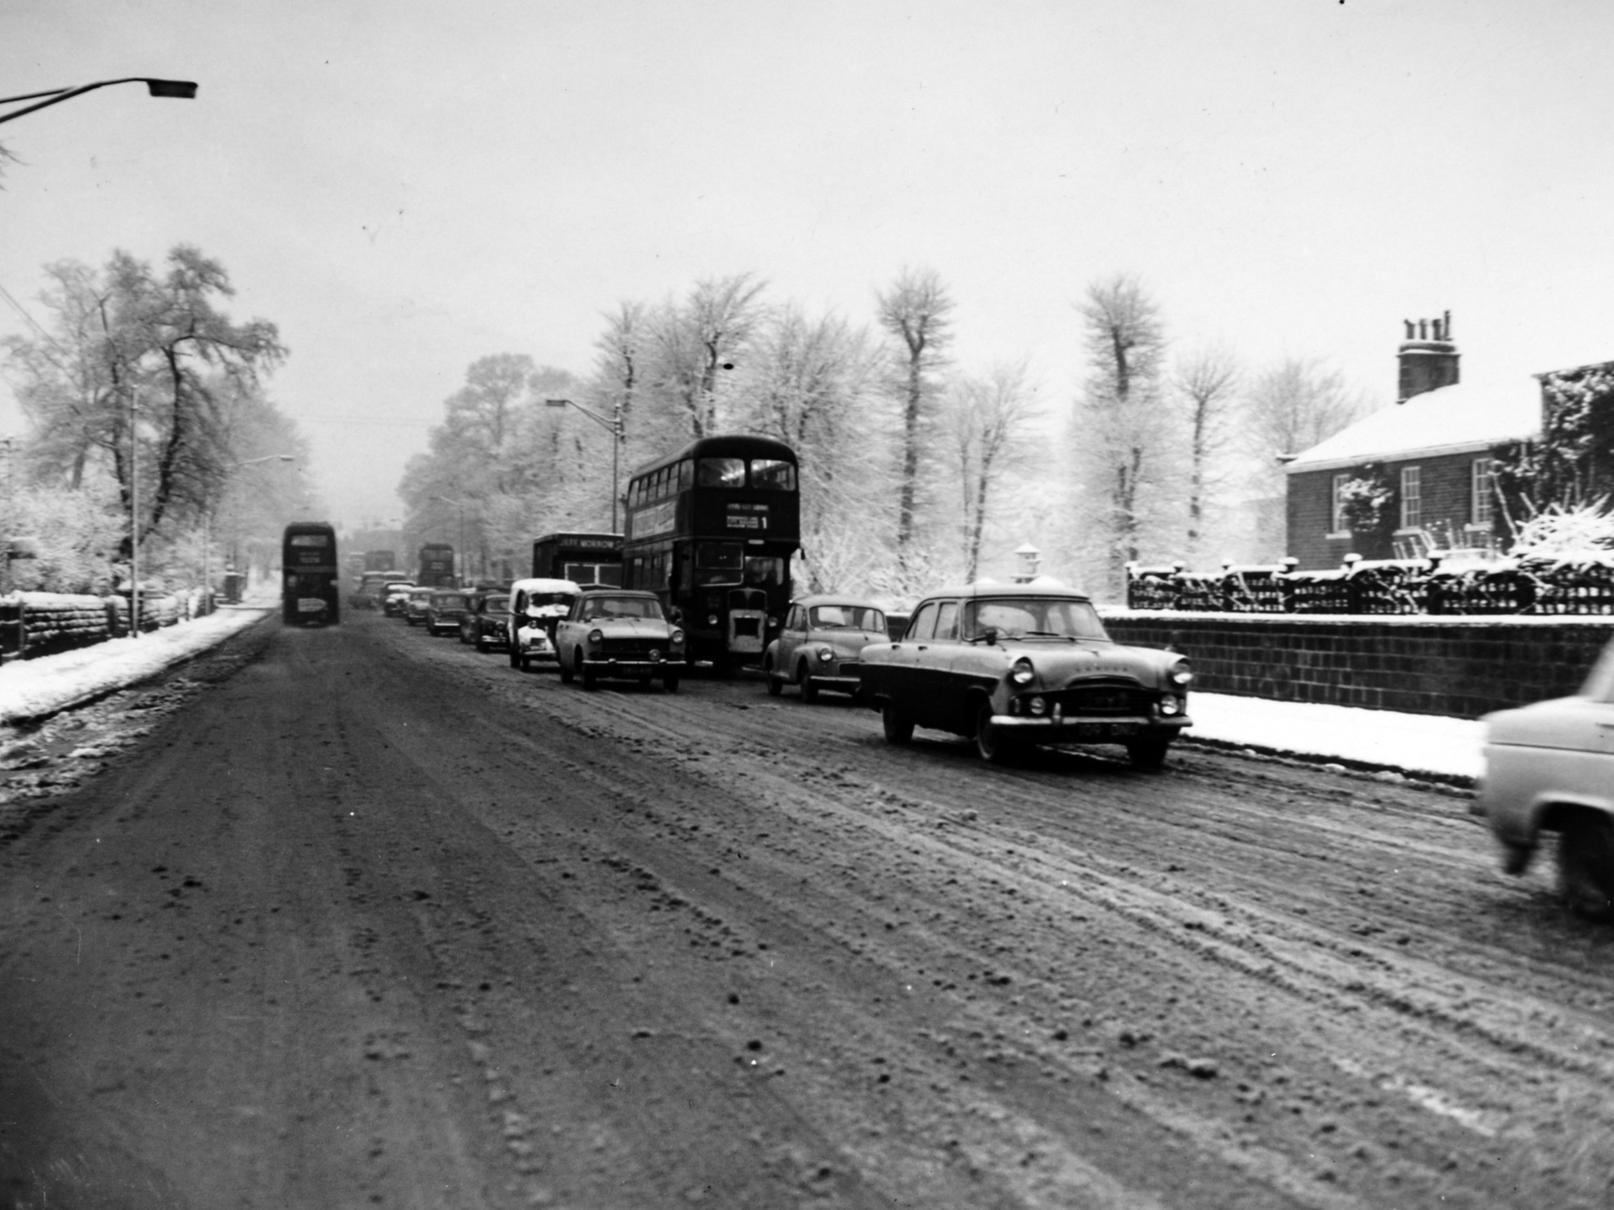 Traffic crawls along Otley Road in Headingley after heavy snow.